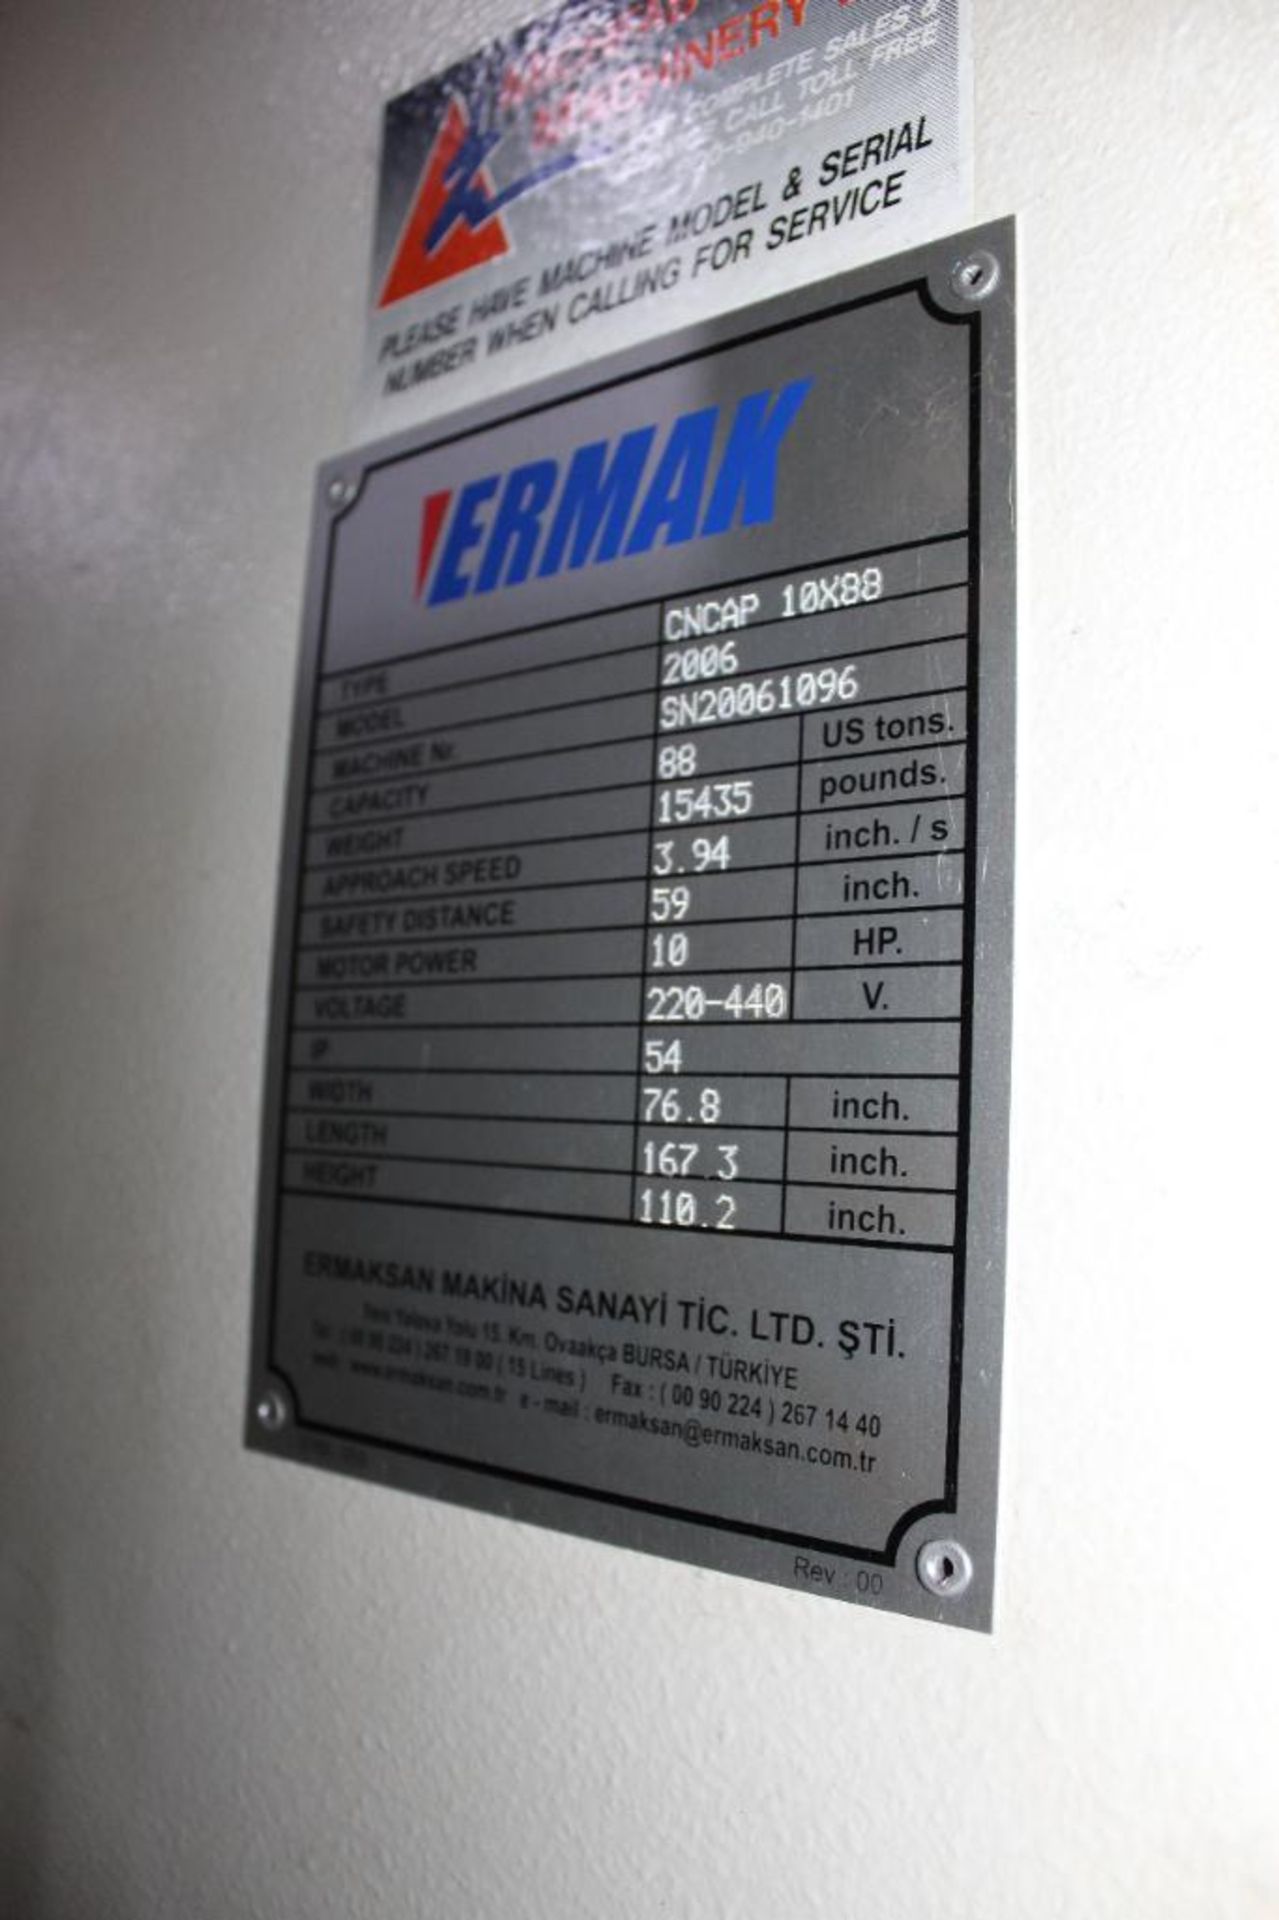 Ermak CNC Press Brake Machine AP 10' 88 W/ DelemDA-GGW Model 2006 - Needs Light Curtain - Image 12 of 16